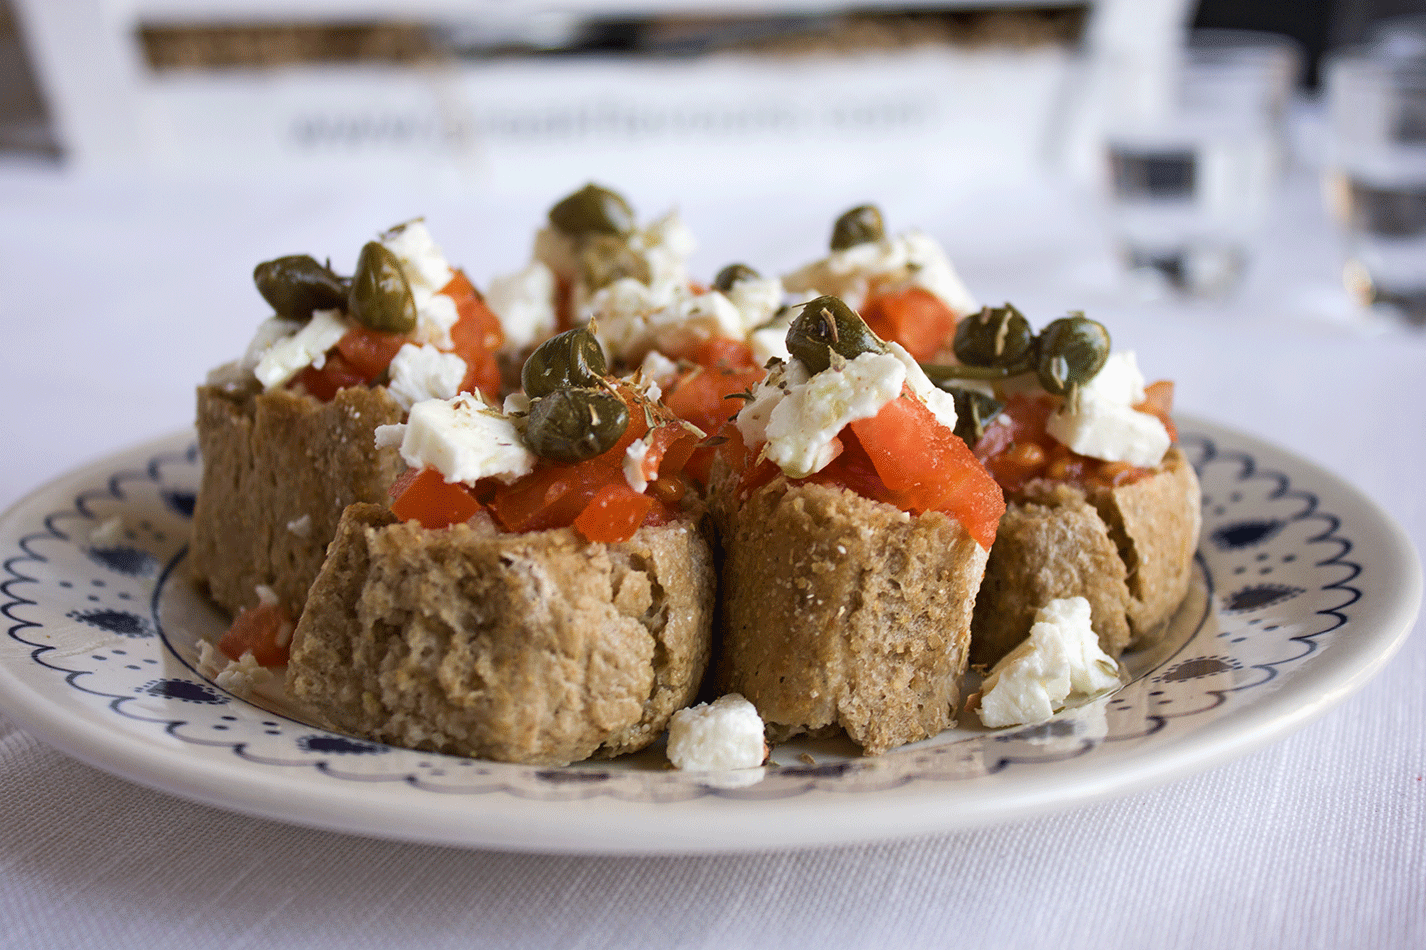 The Dakos salad, a Cretan delight